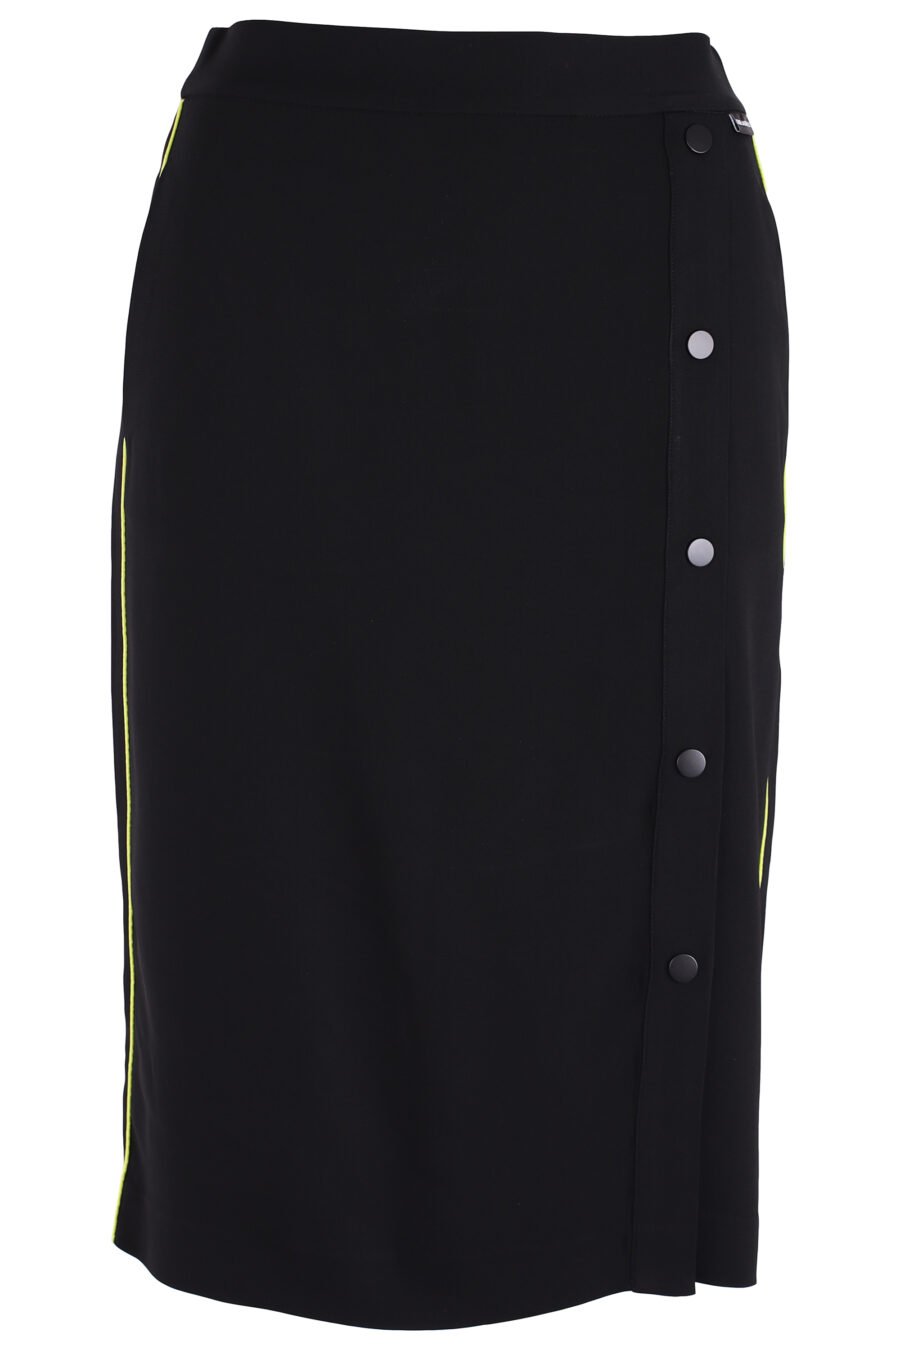 Black skirt with yellow line - IMG 3735